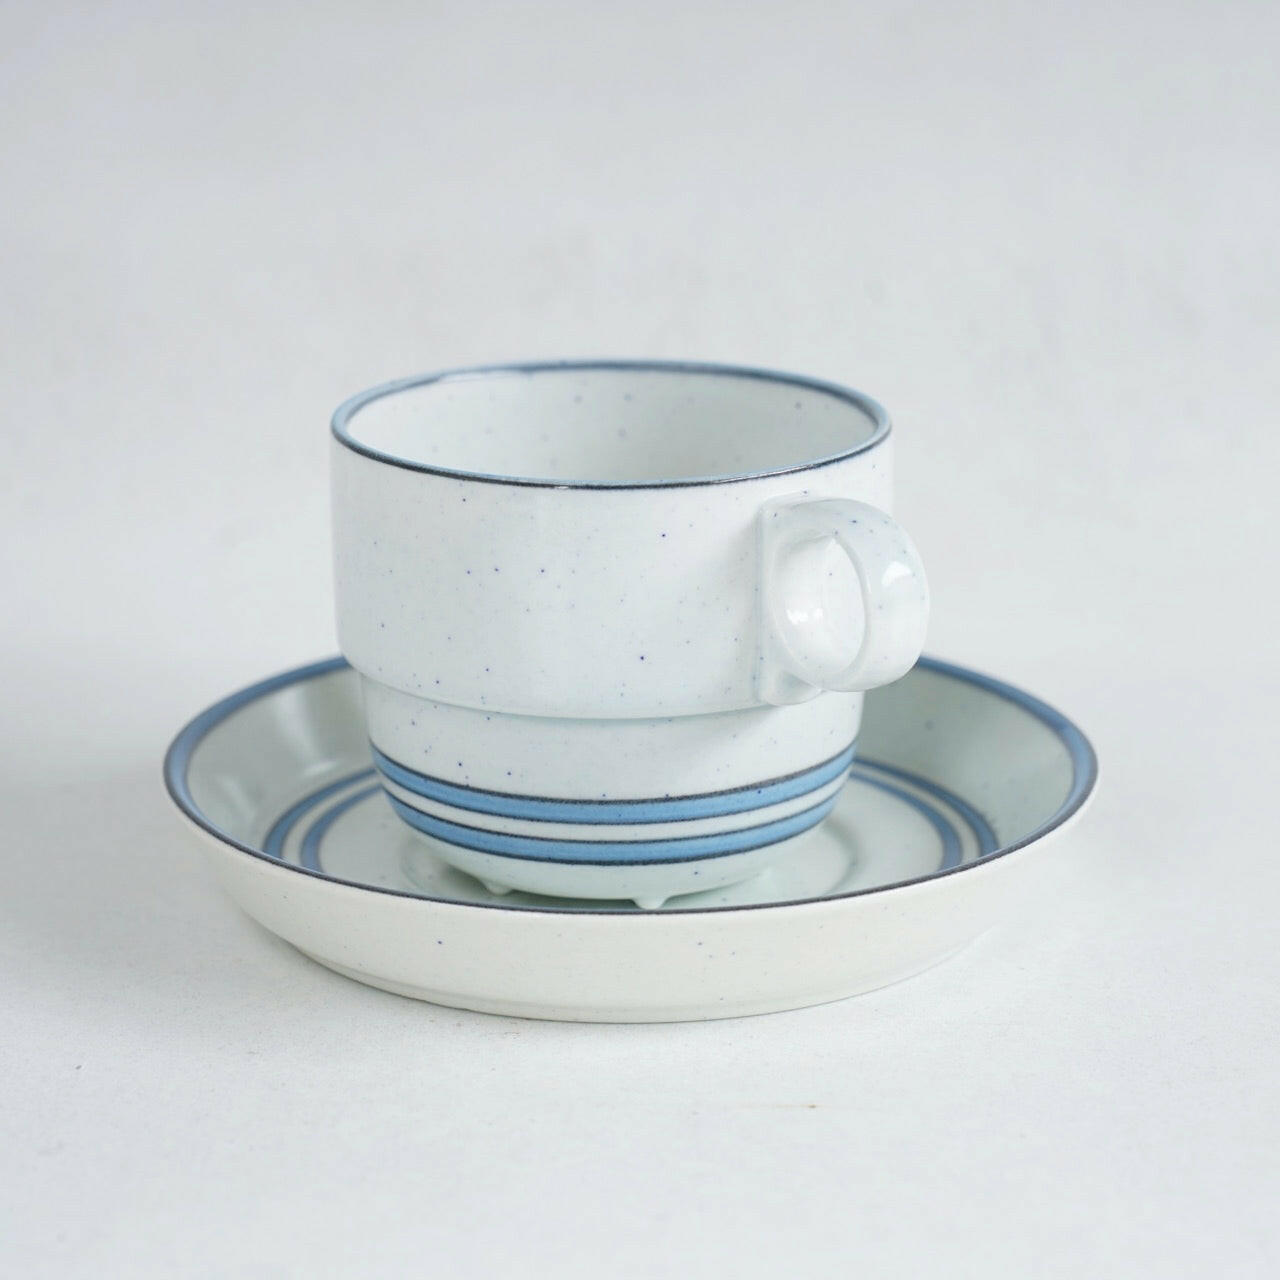 Gustavsberg Dart teacup and saucer